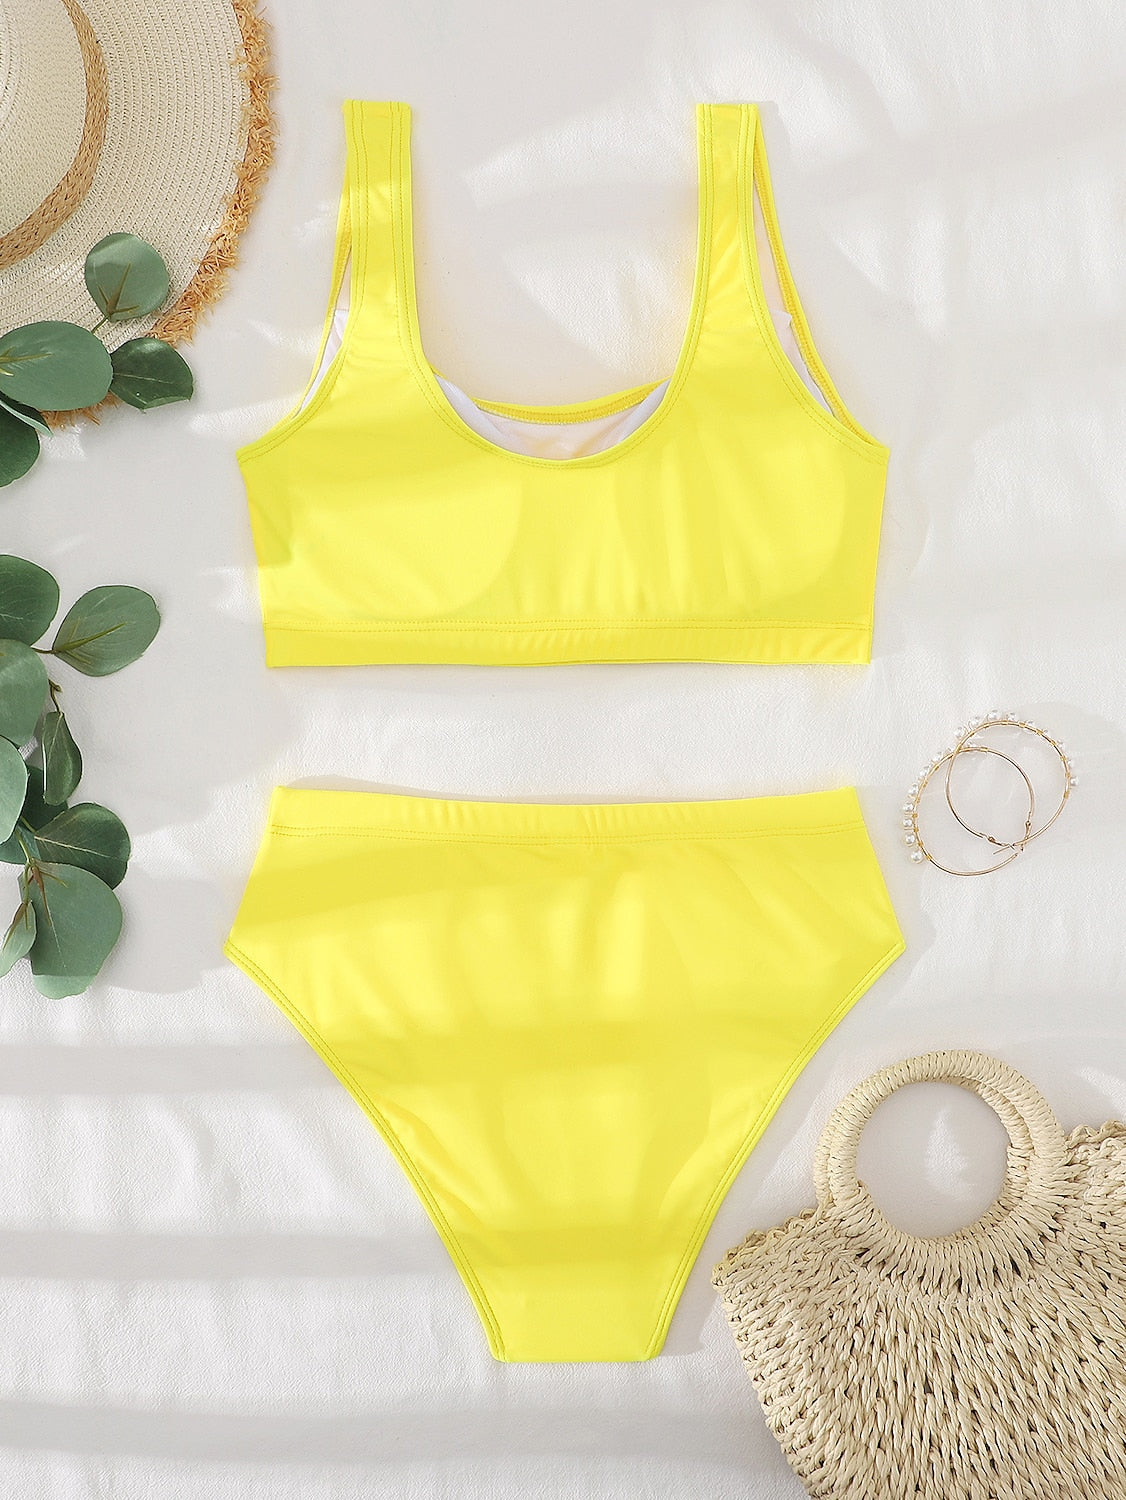 Women's Swimwear Bikini Normal Swimsuit 2 Piece Printing Graphic claret Yellow Pink Blue Coffee Bathing Suits Sports Beach Wear Summer